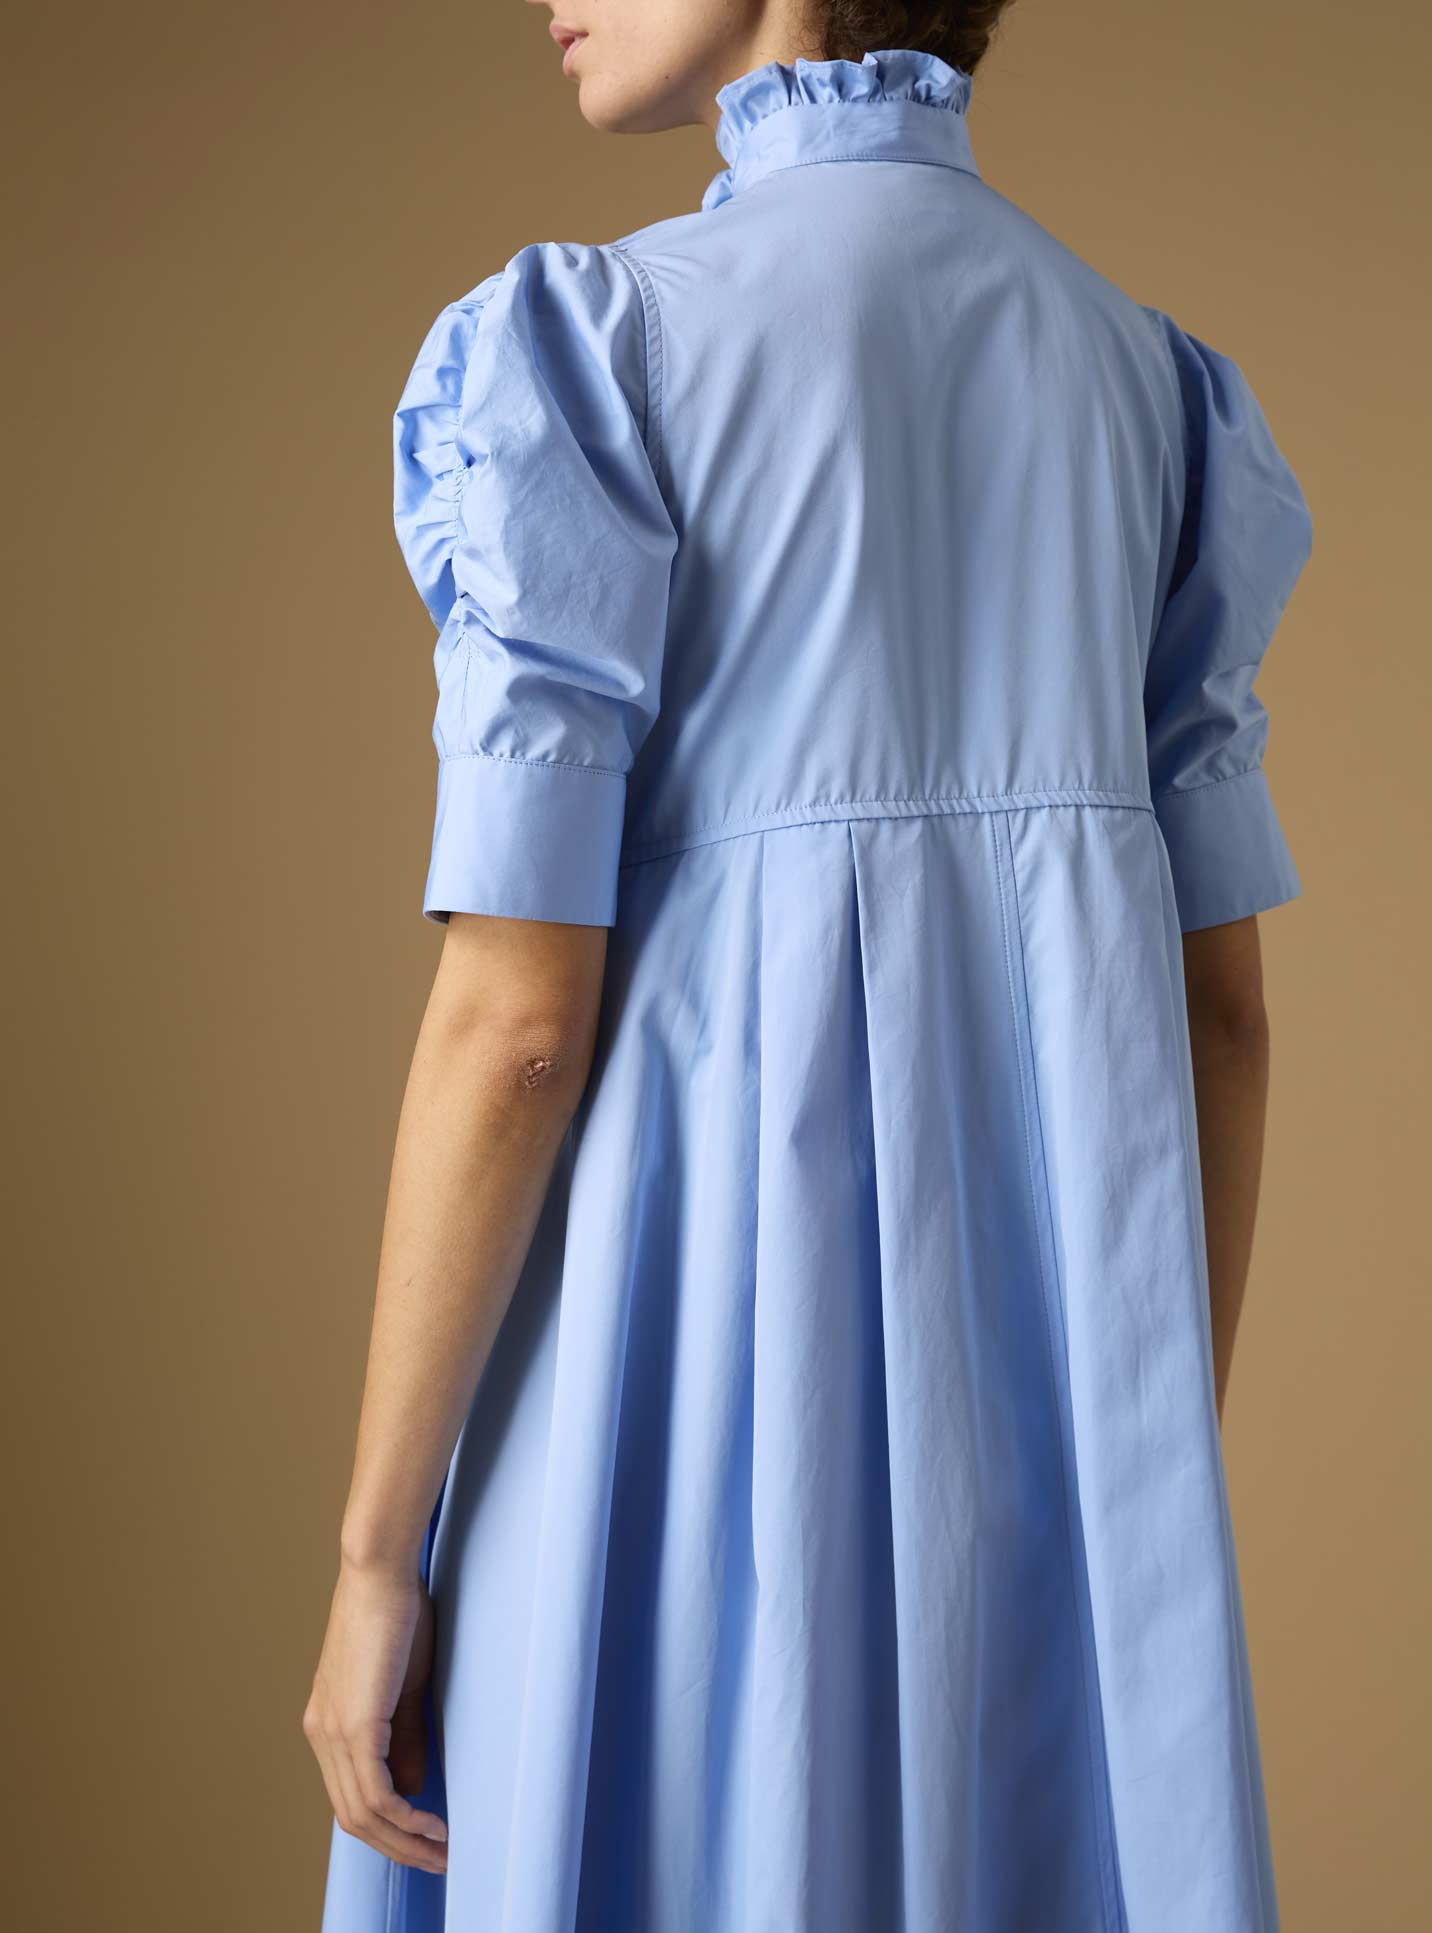 Back view detail of Venetia Plain Poplin Blue Dress by Thierry Colson